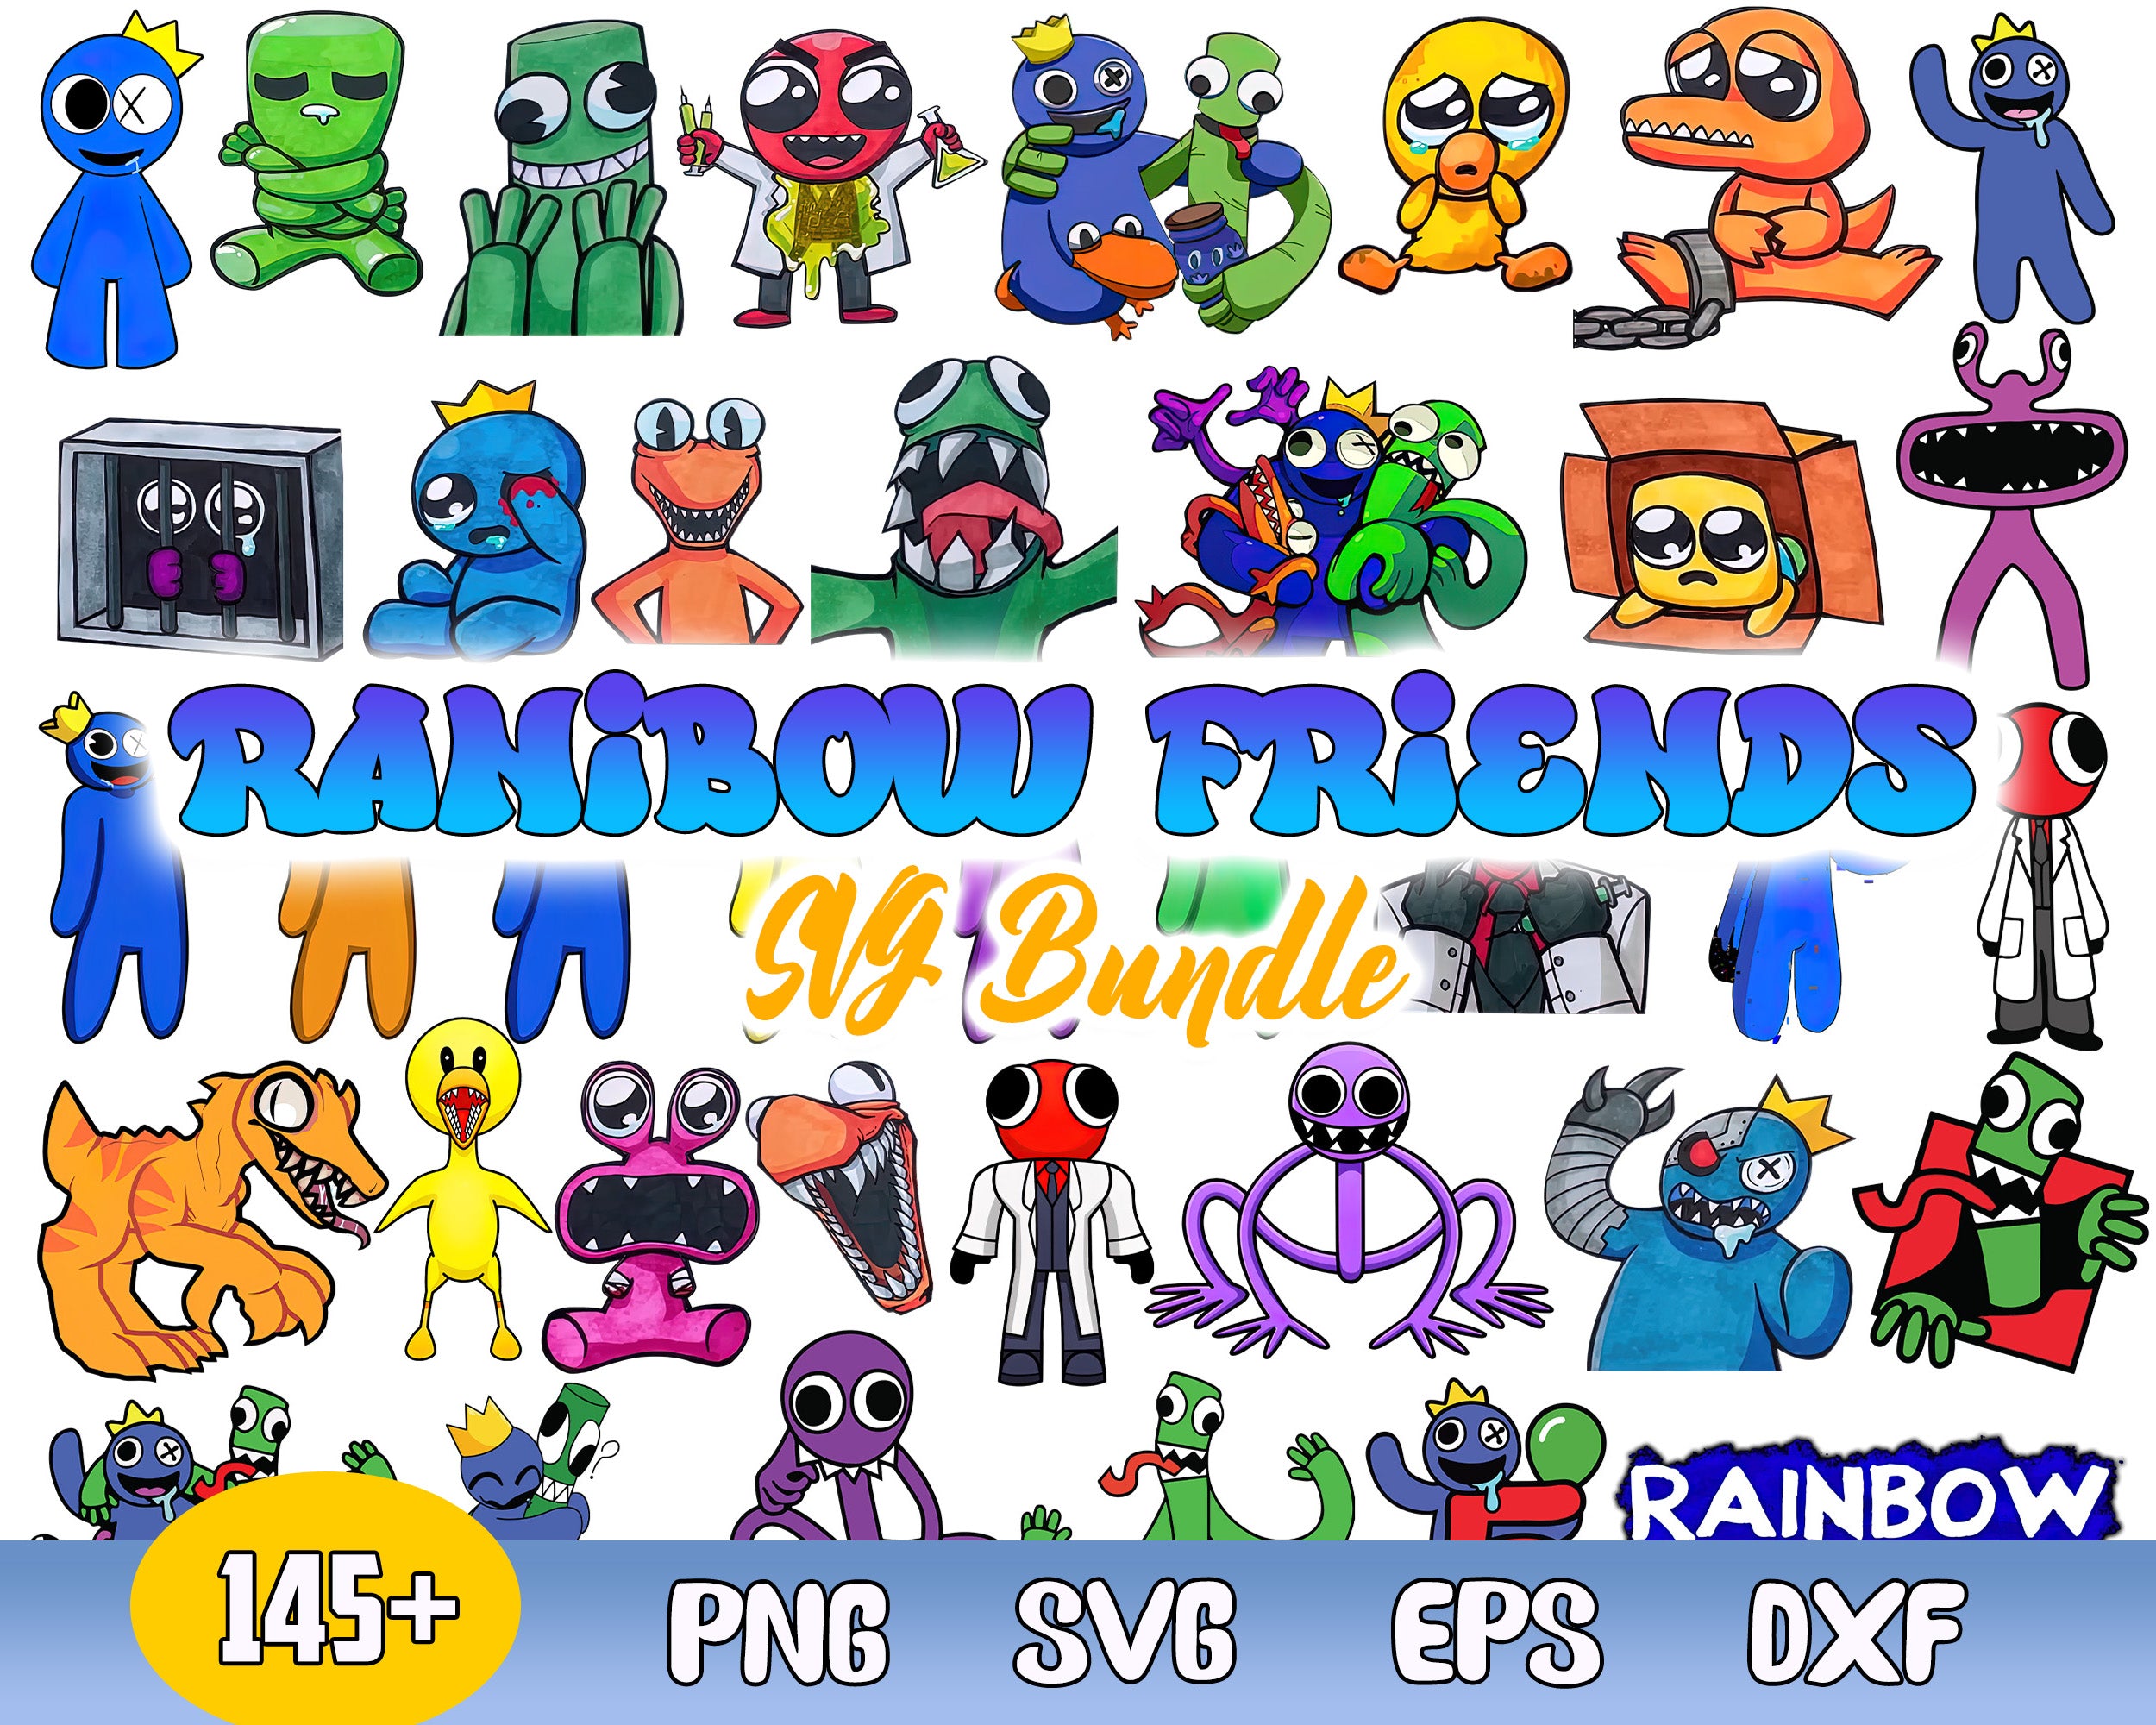 145+ Rainbow friends SVG, Rainbow friends PNG, Sublimation, Transfer, Digital download, Vector illustration